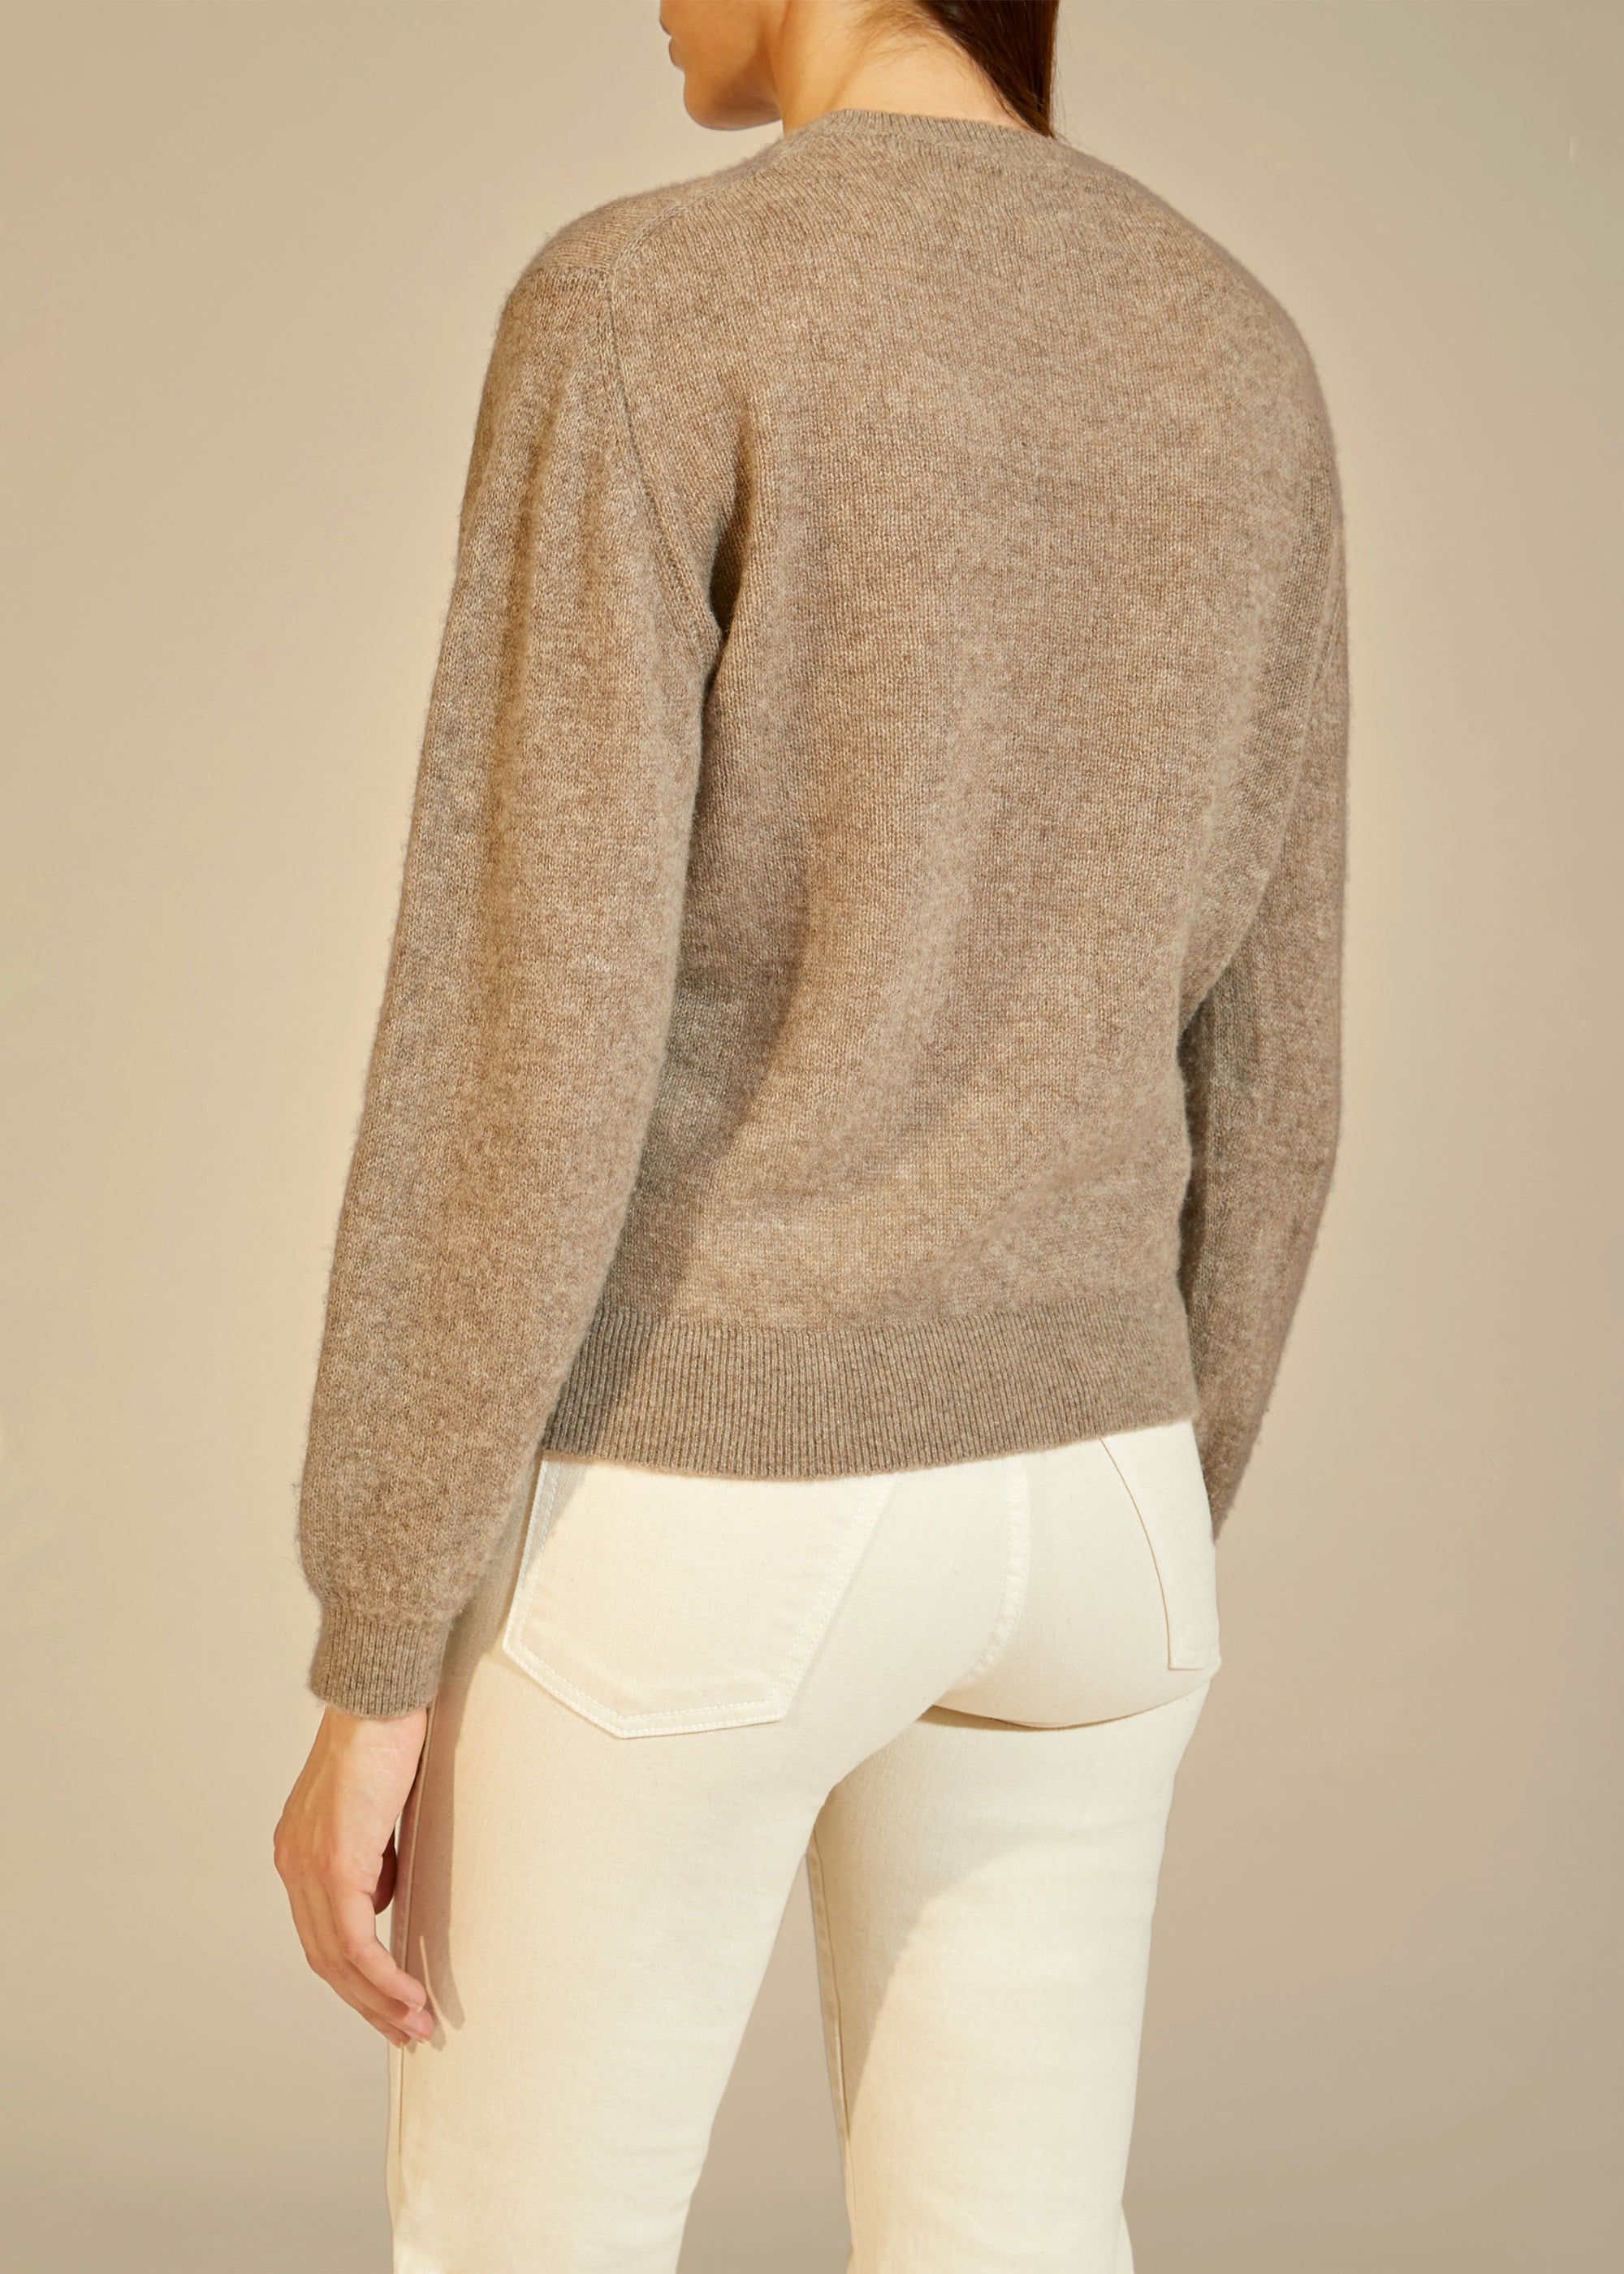 Viola sweater in cashmere - Barley